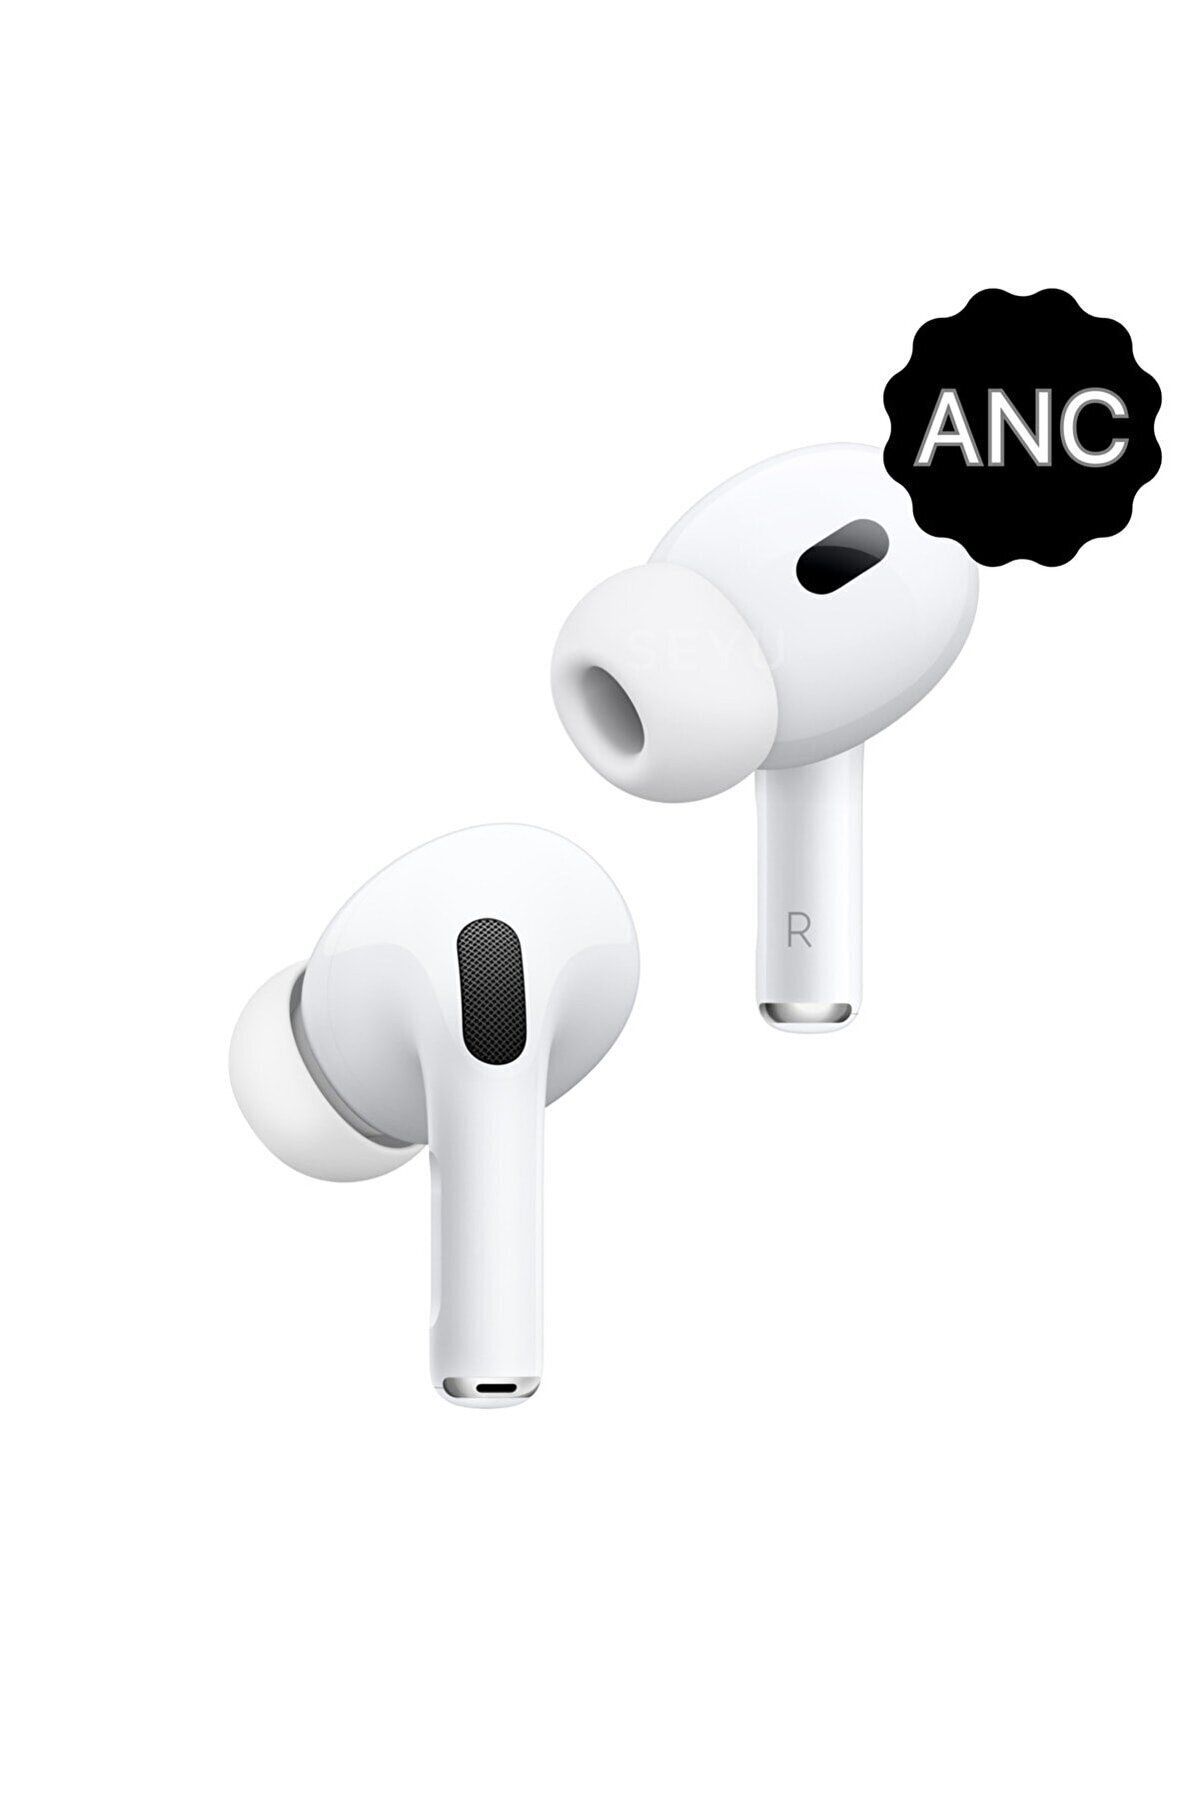 LEN10 Kulaklık AİR Pro 2 Anc Bluetooth Kulaklık Gürültü Engelleme Şeffaf Mod ios/android